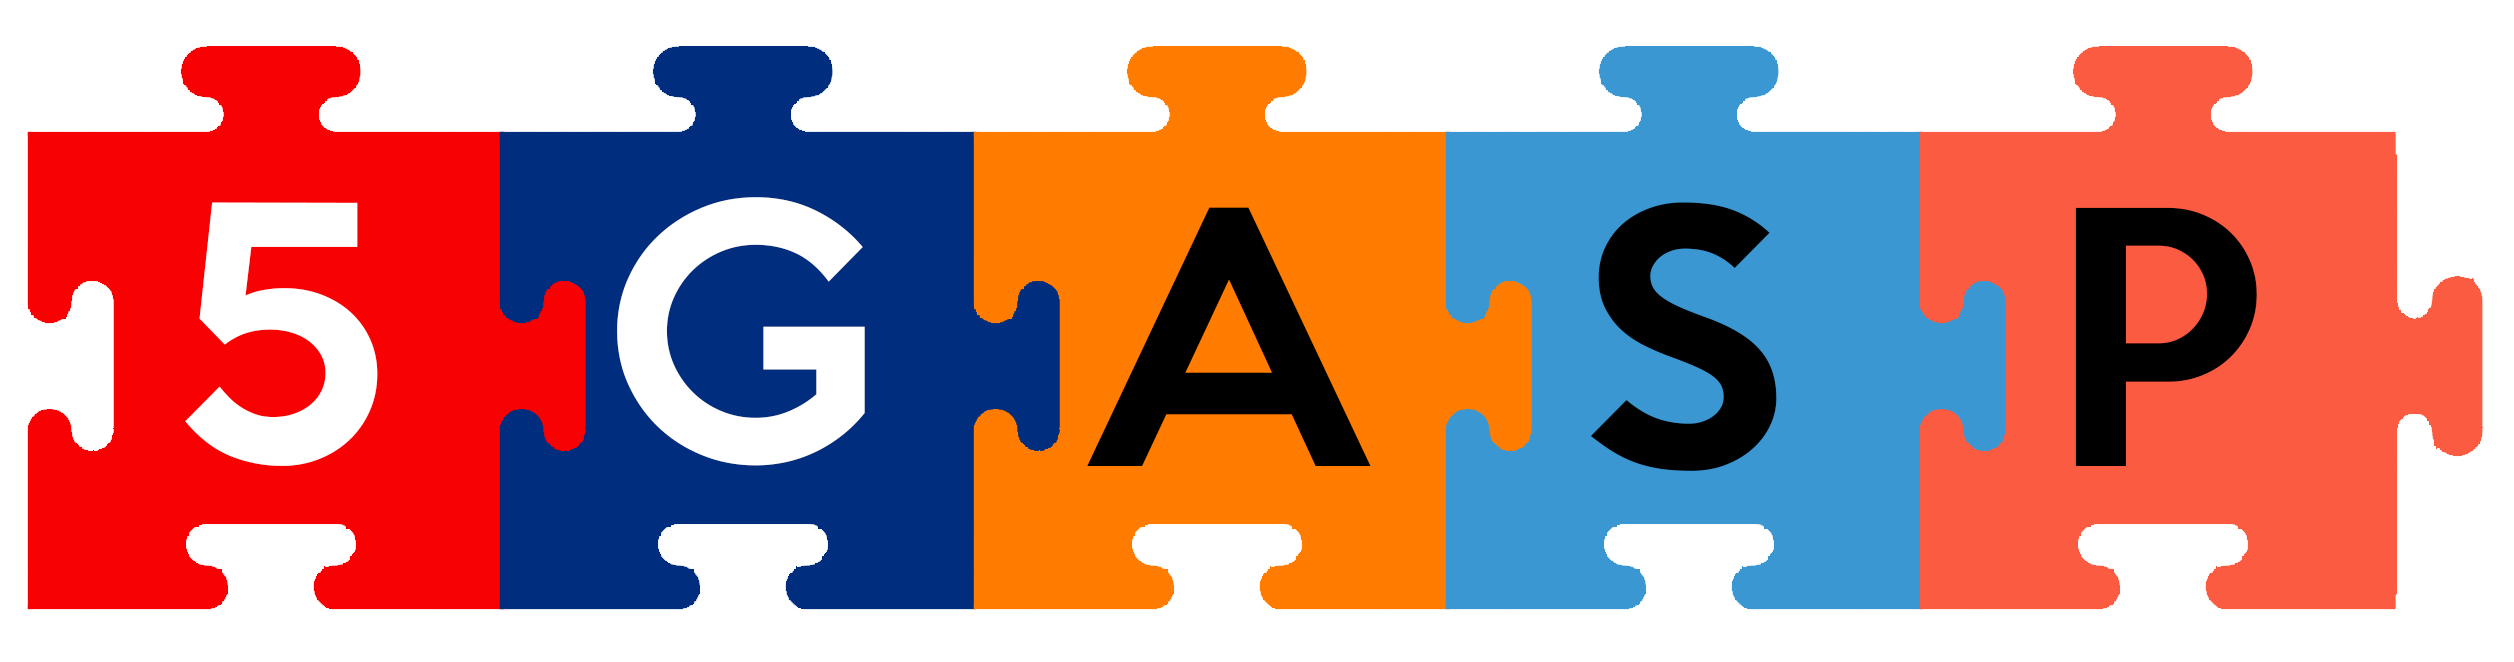 5gasp-logo-1